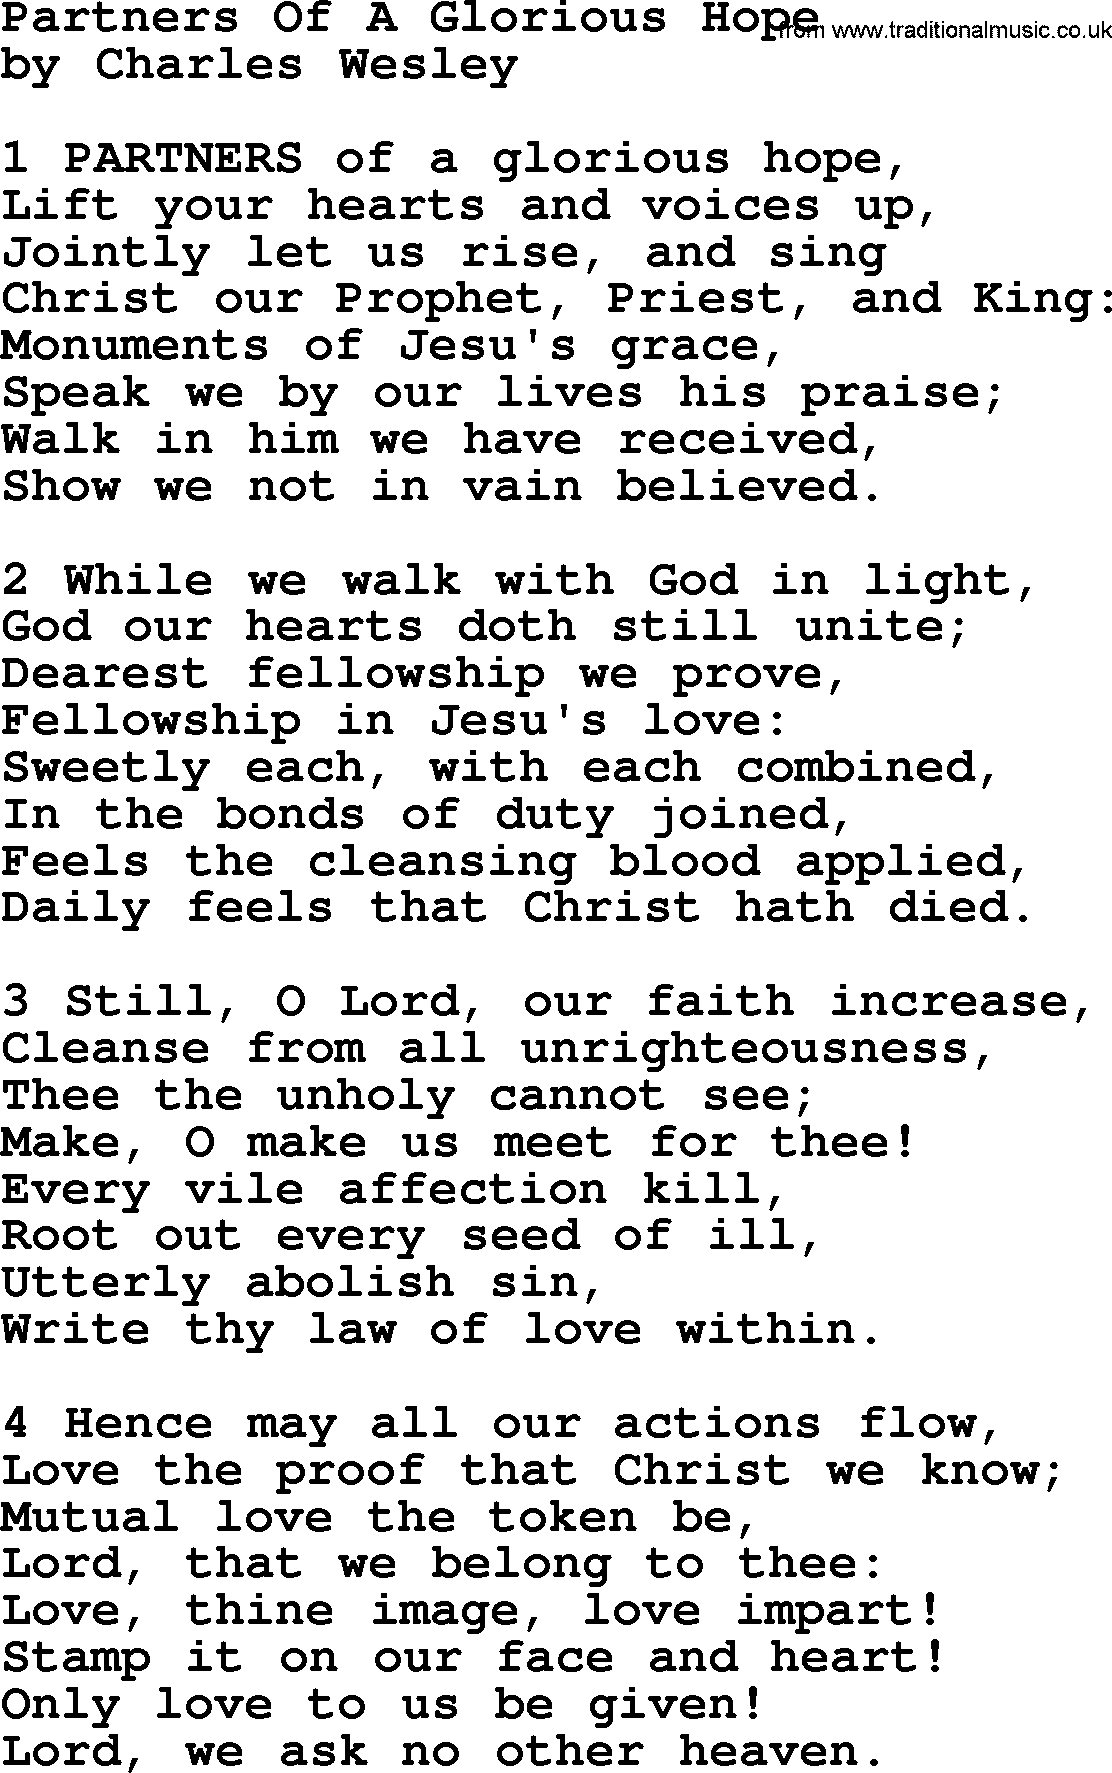 Charles Wesley hymn: Partners Of A Glorious Hope, lyrics